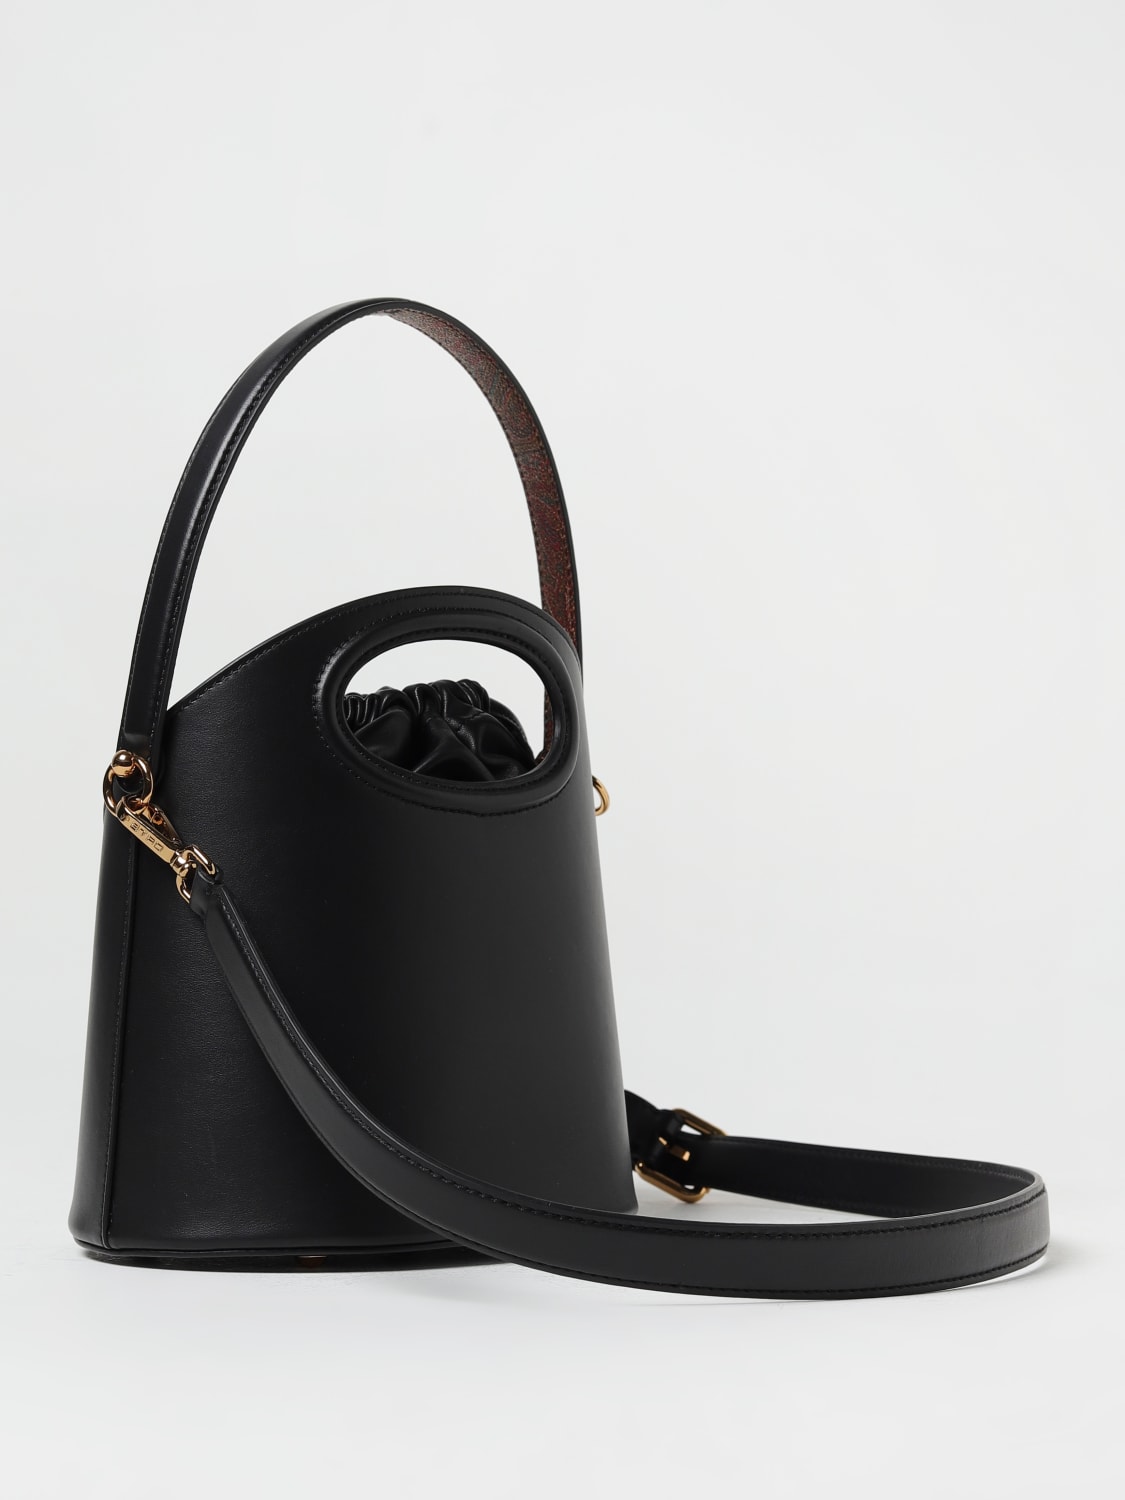 Etro Pegaso Grey/Black Paisley Printed Leather Shoulder Bag w/ Adjustable Strap